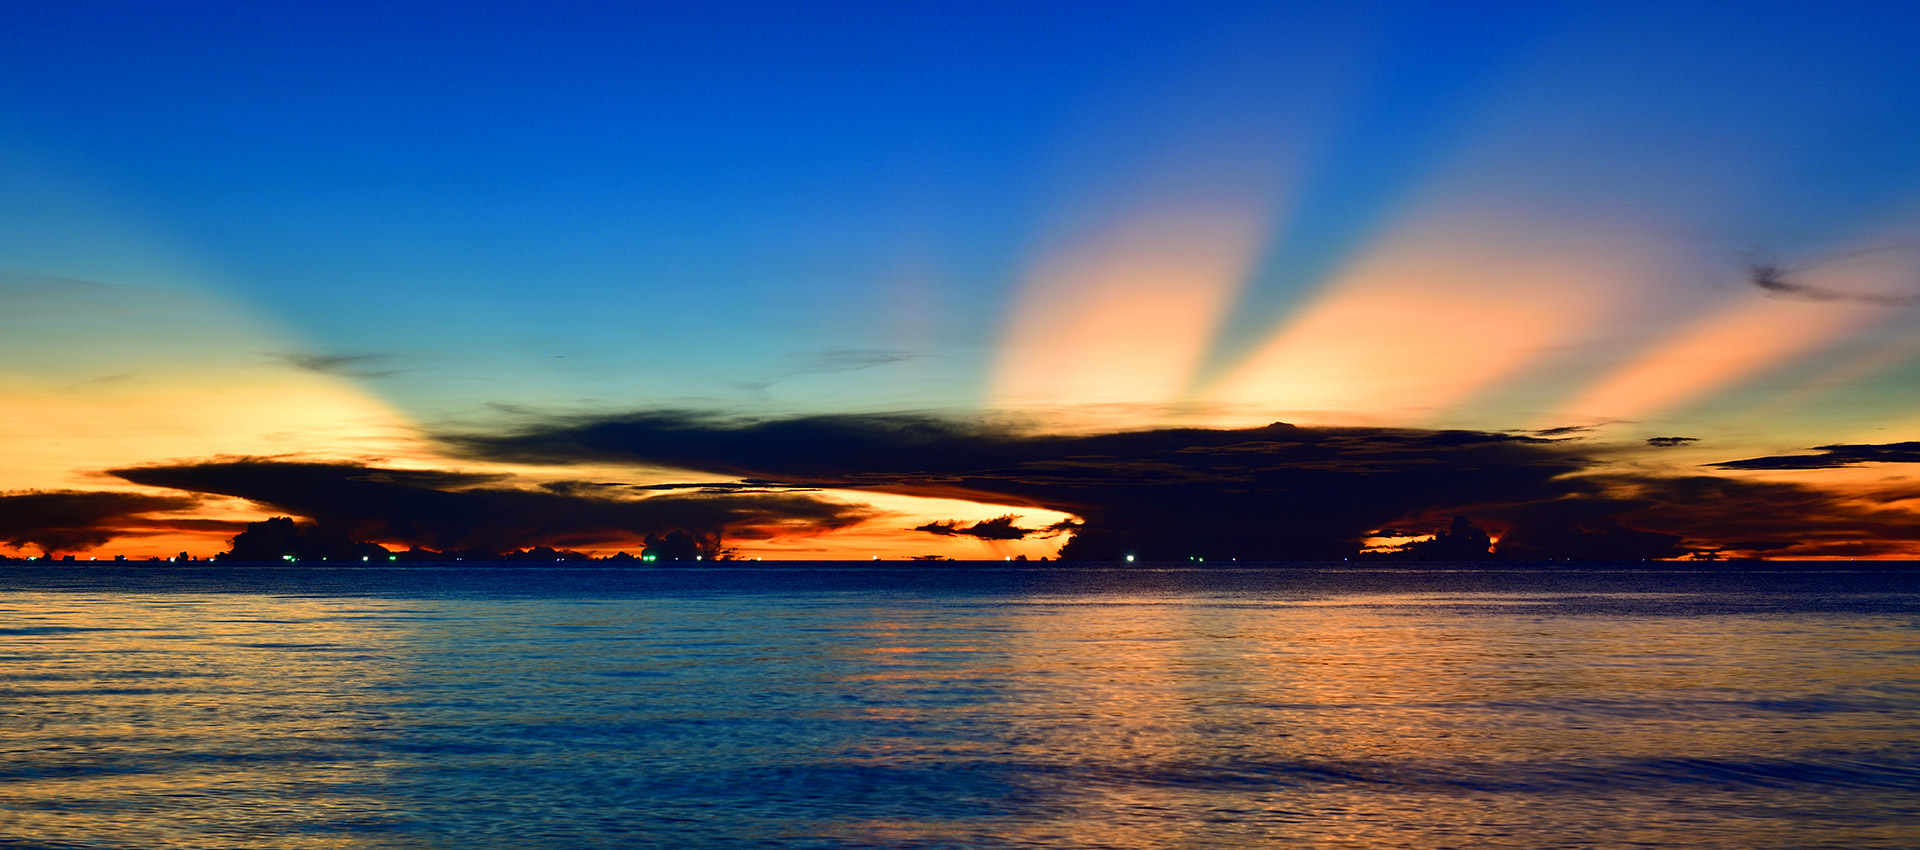 Закаты на острове Фукуок. Вьетнам. Sunset on Phu Quoc Island. Vietnam. 5